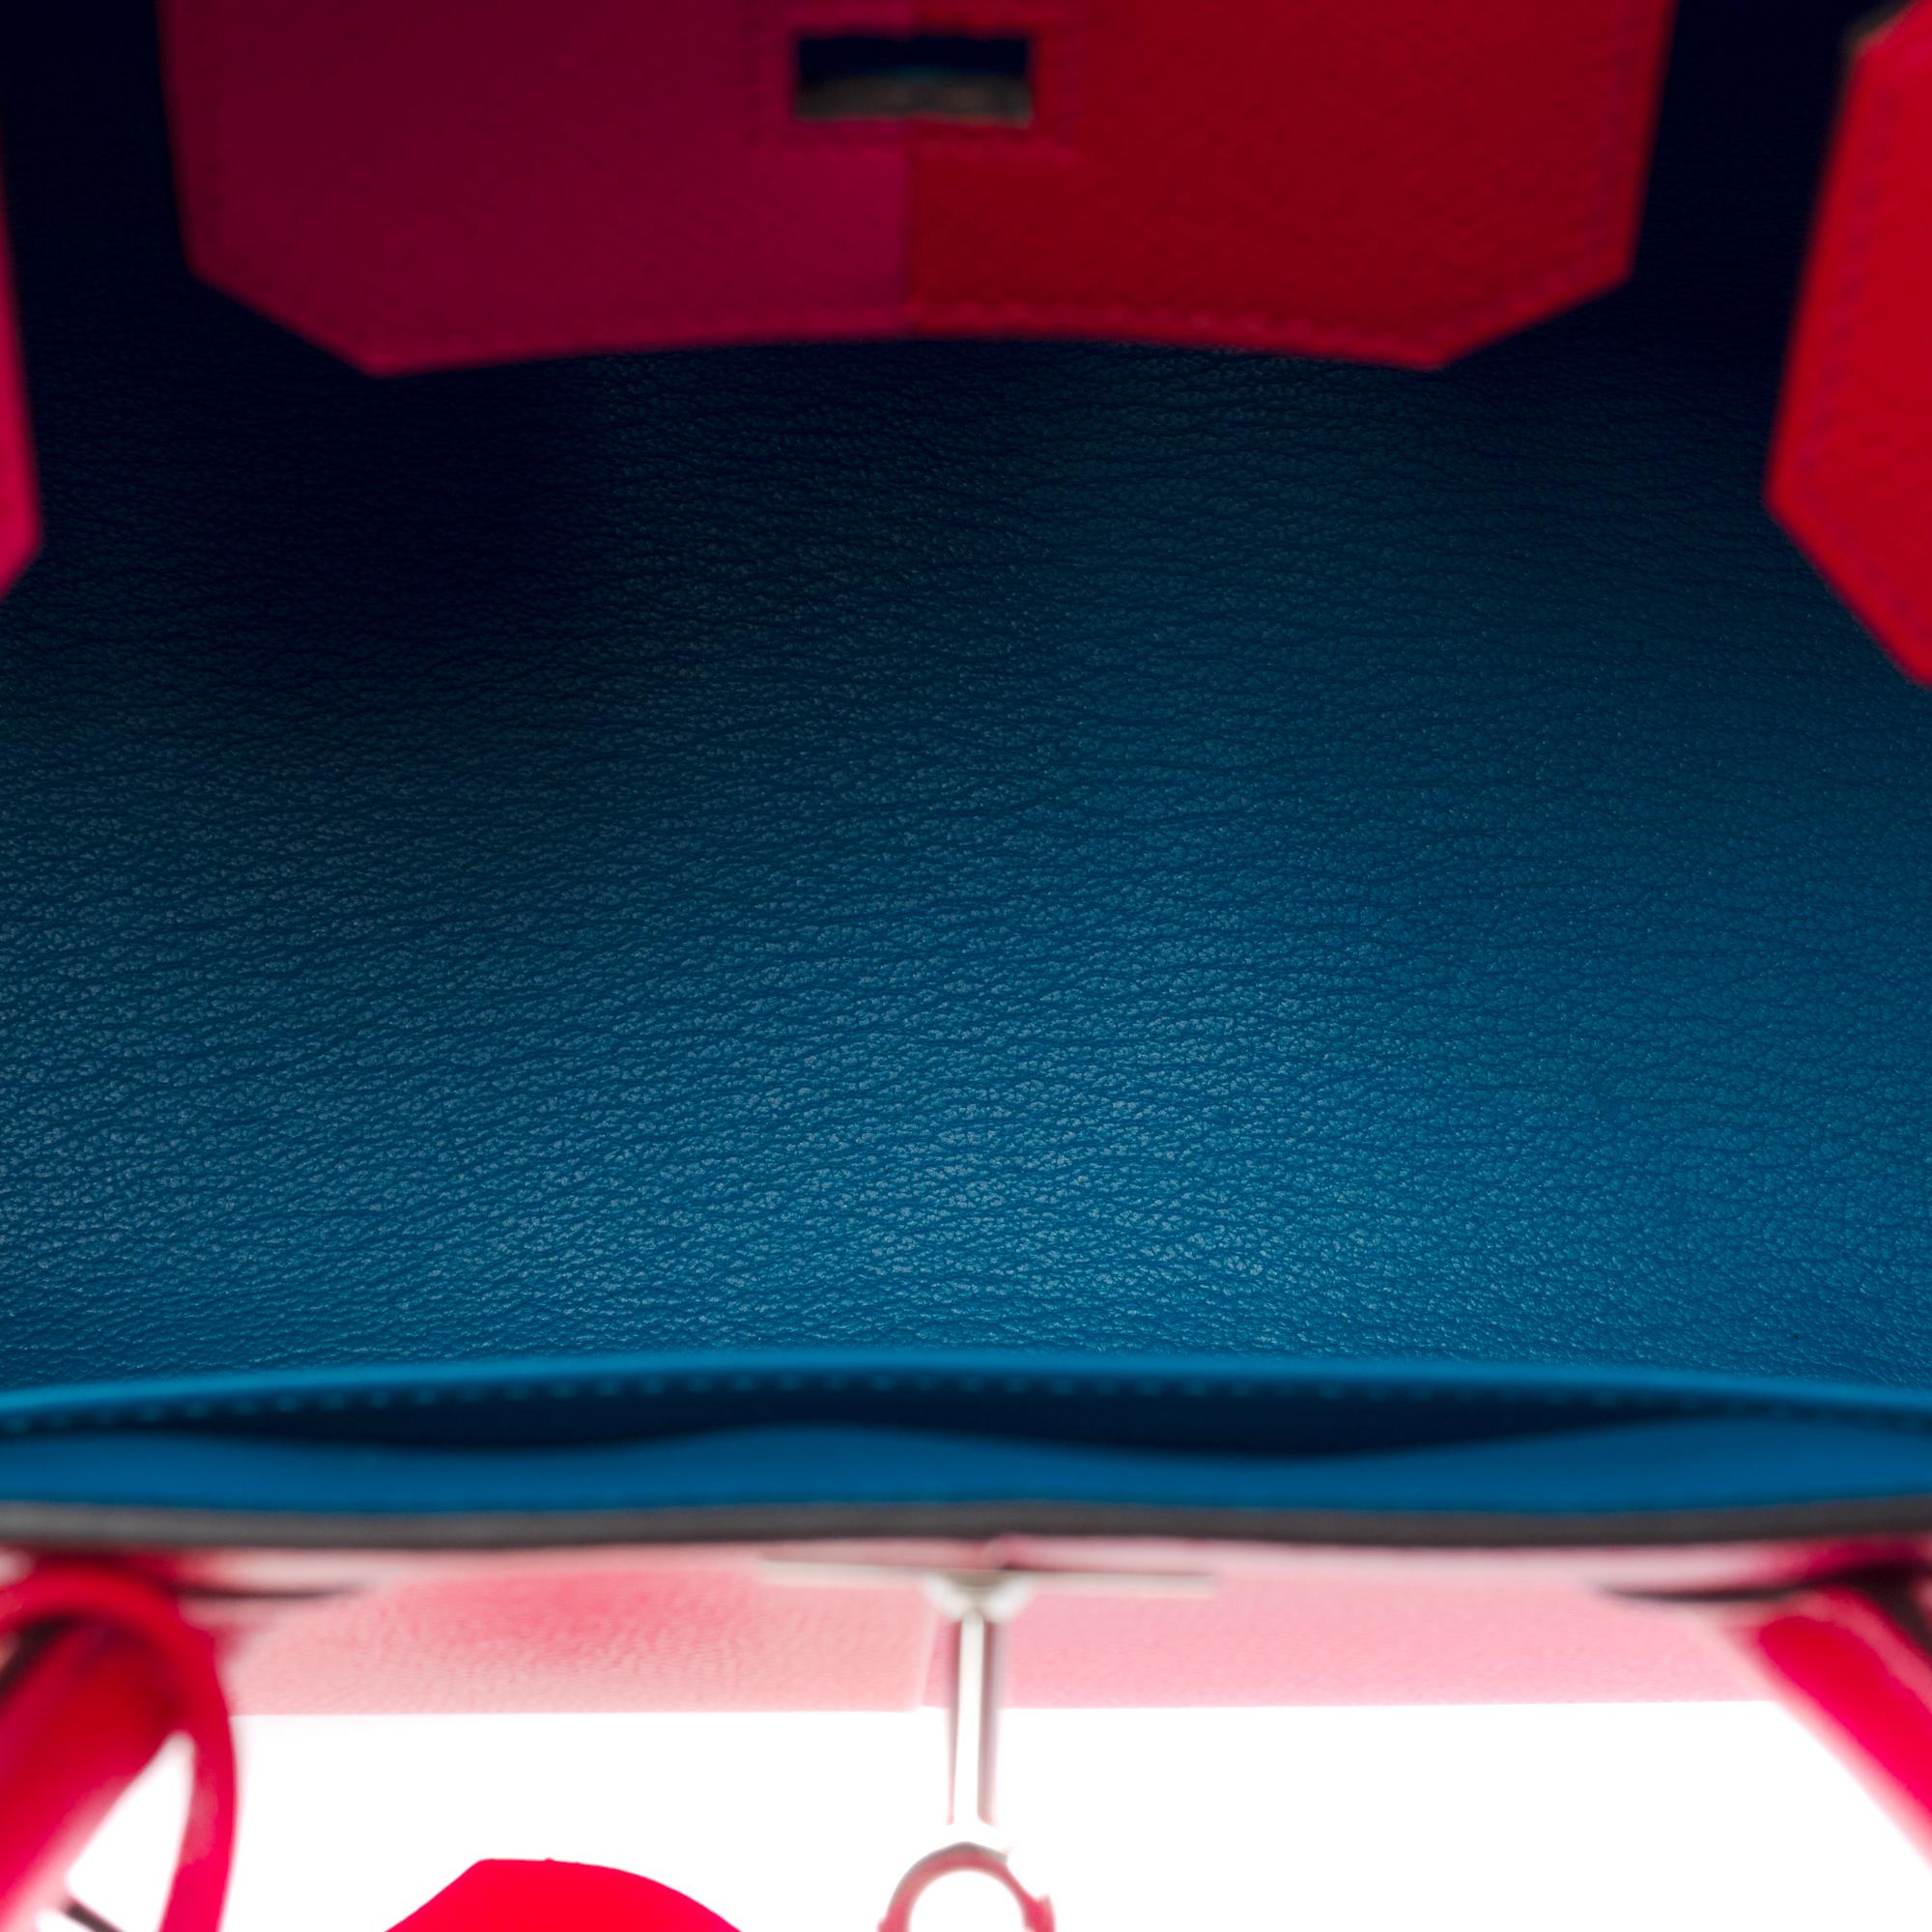 New Hermès Kazak limited edition Birkin 30 handbag in Red/Pink Epsom leather, SHW 4